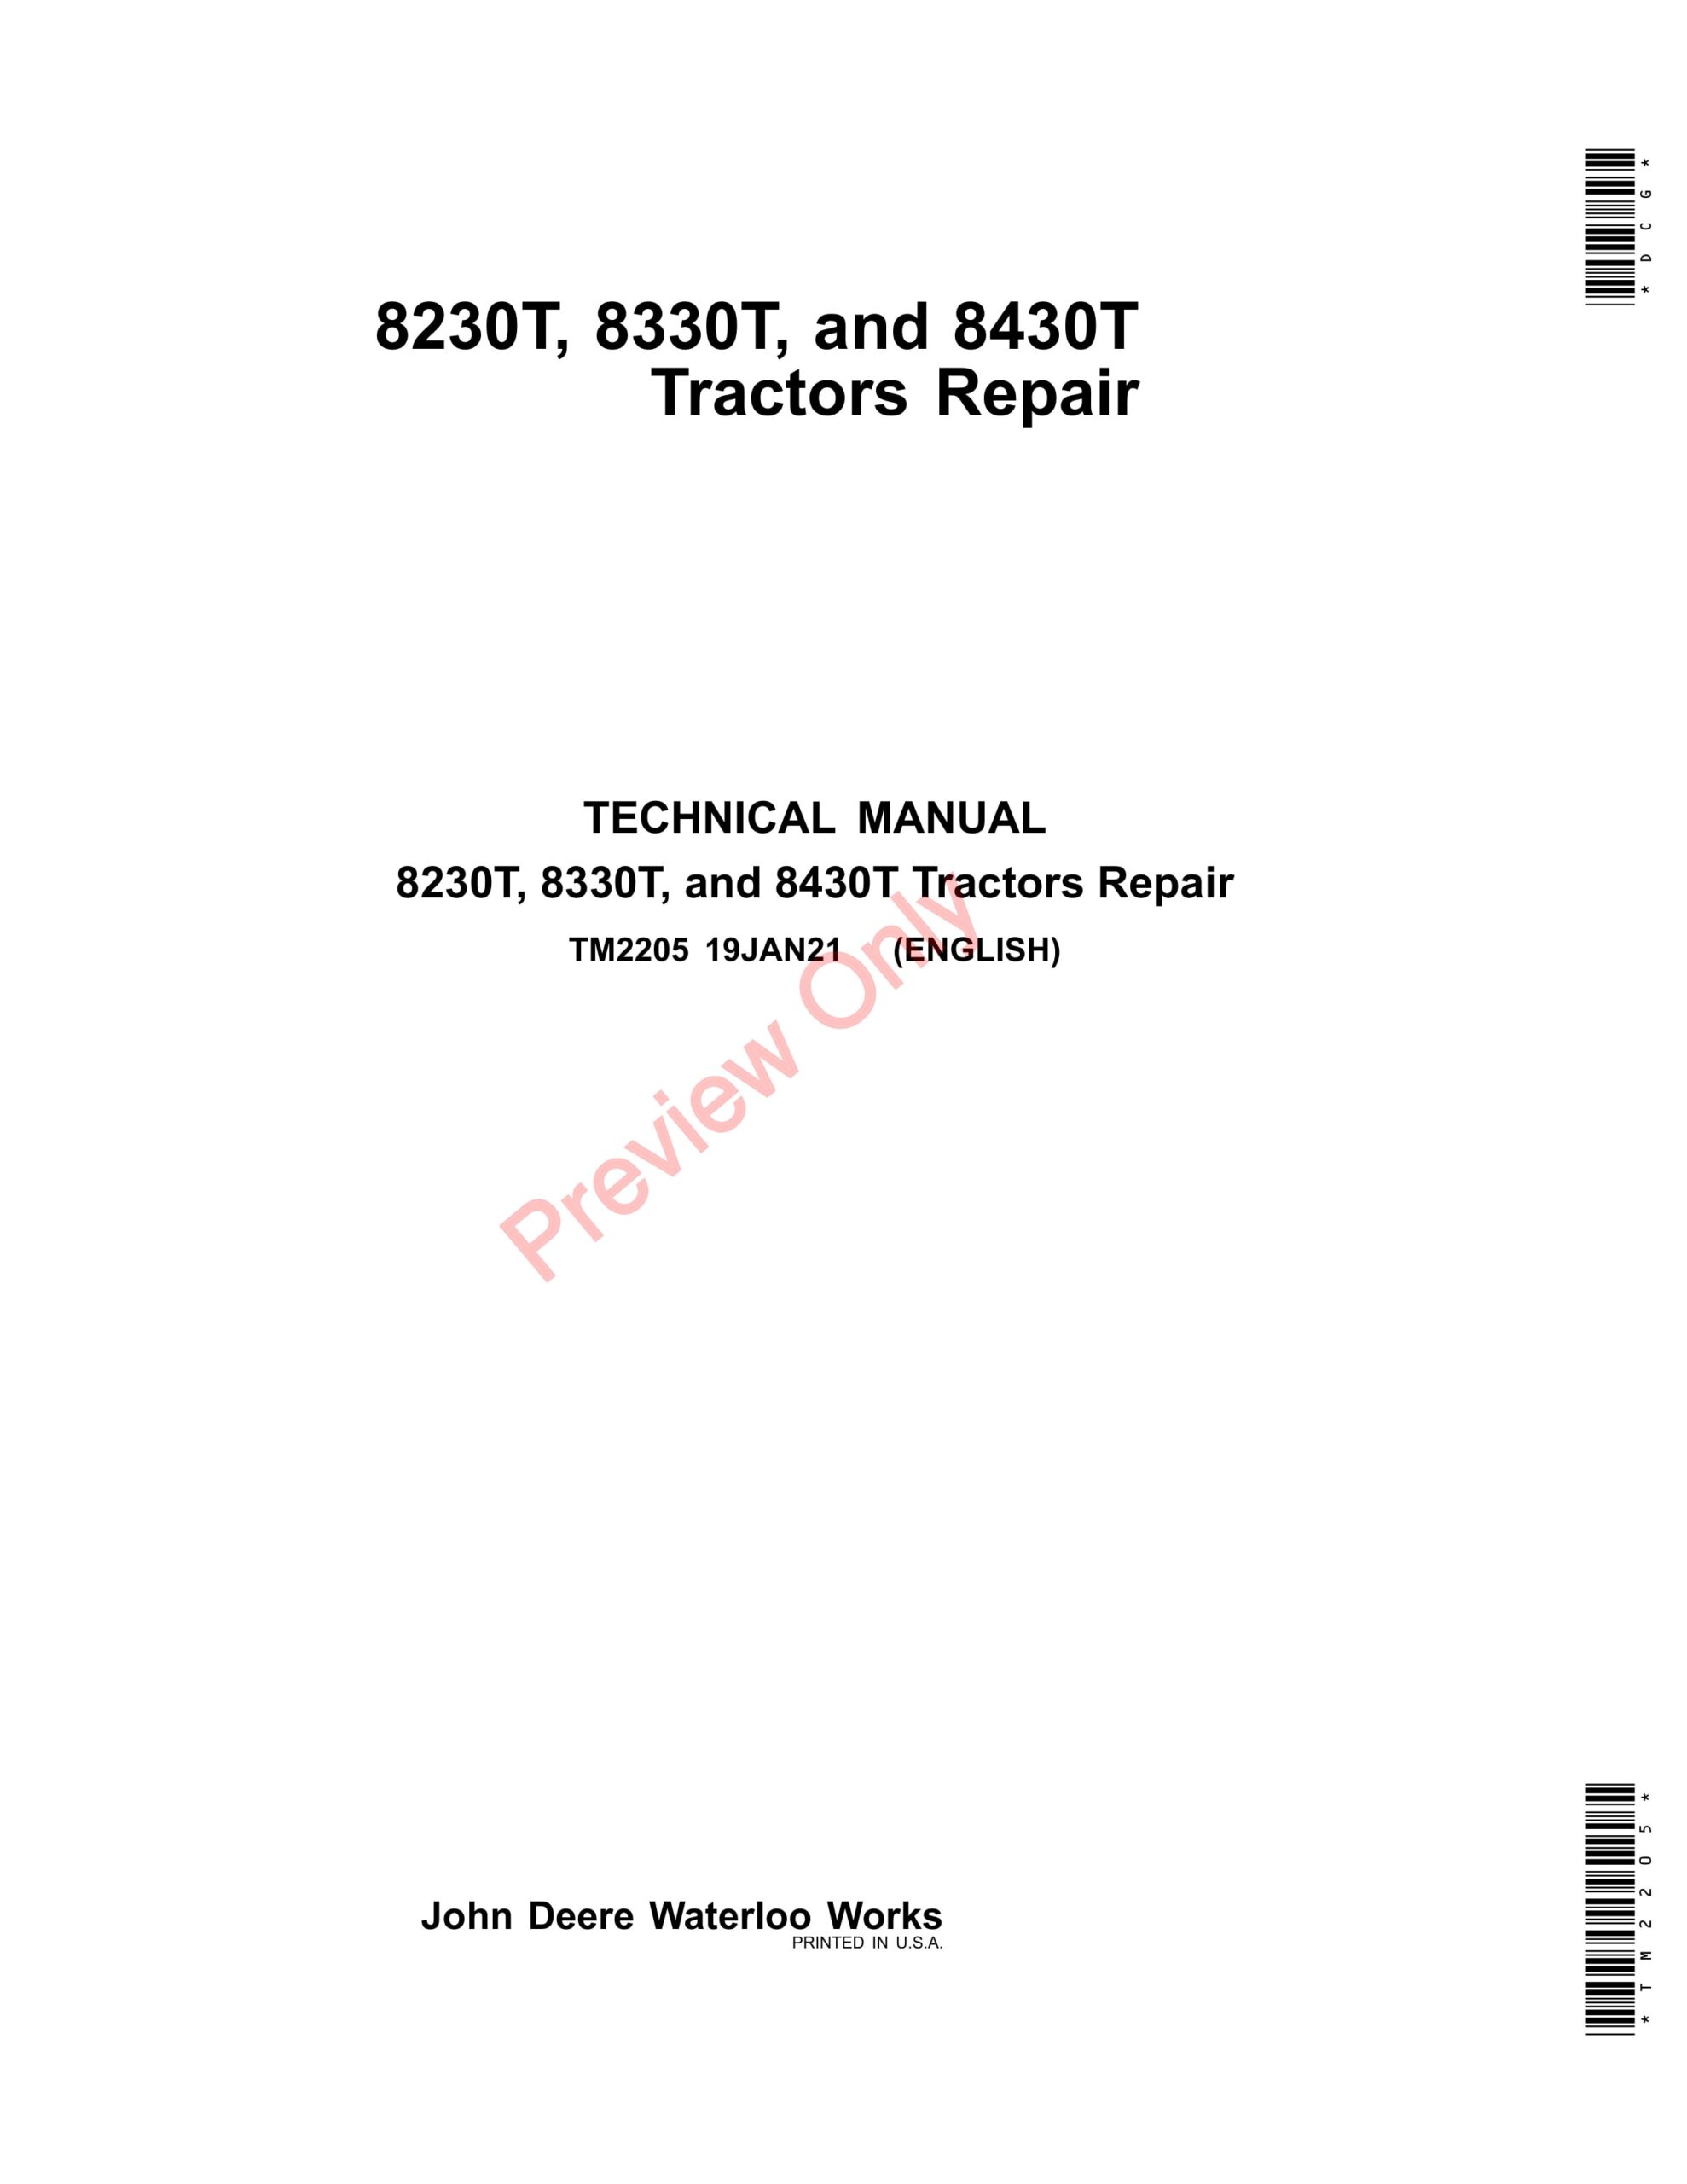 John Deere 8230T, 8330T, and 8430T Tractors Technical Manual TM2205 19JAN21-1